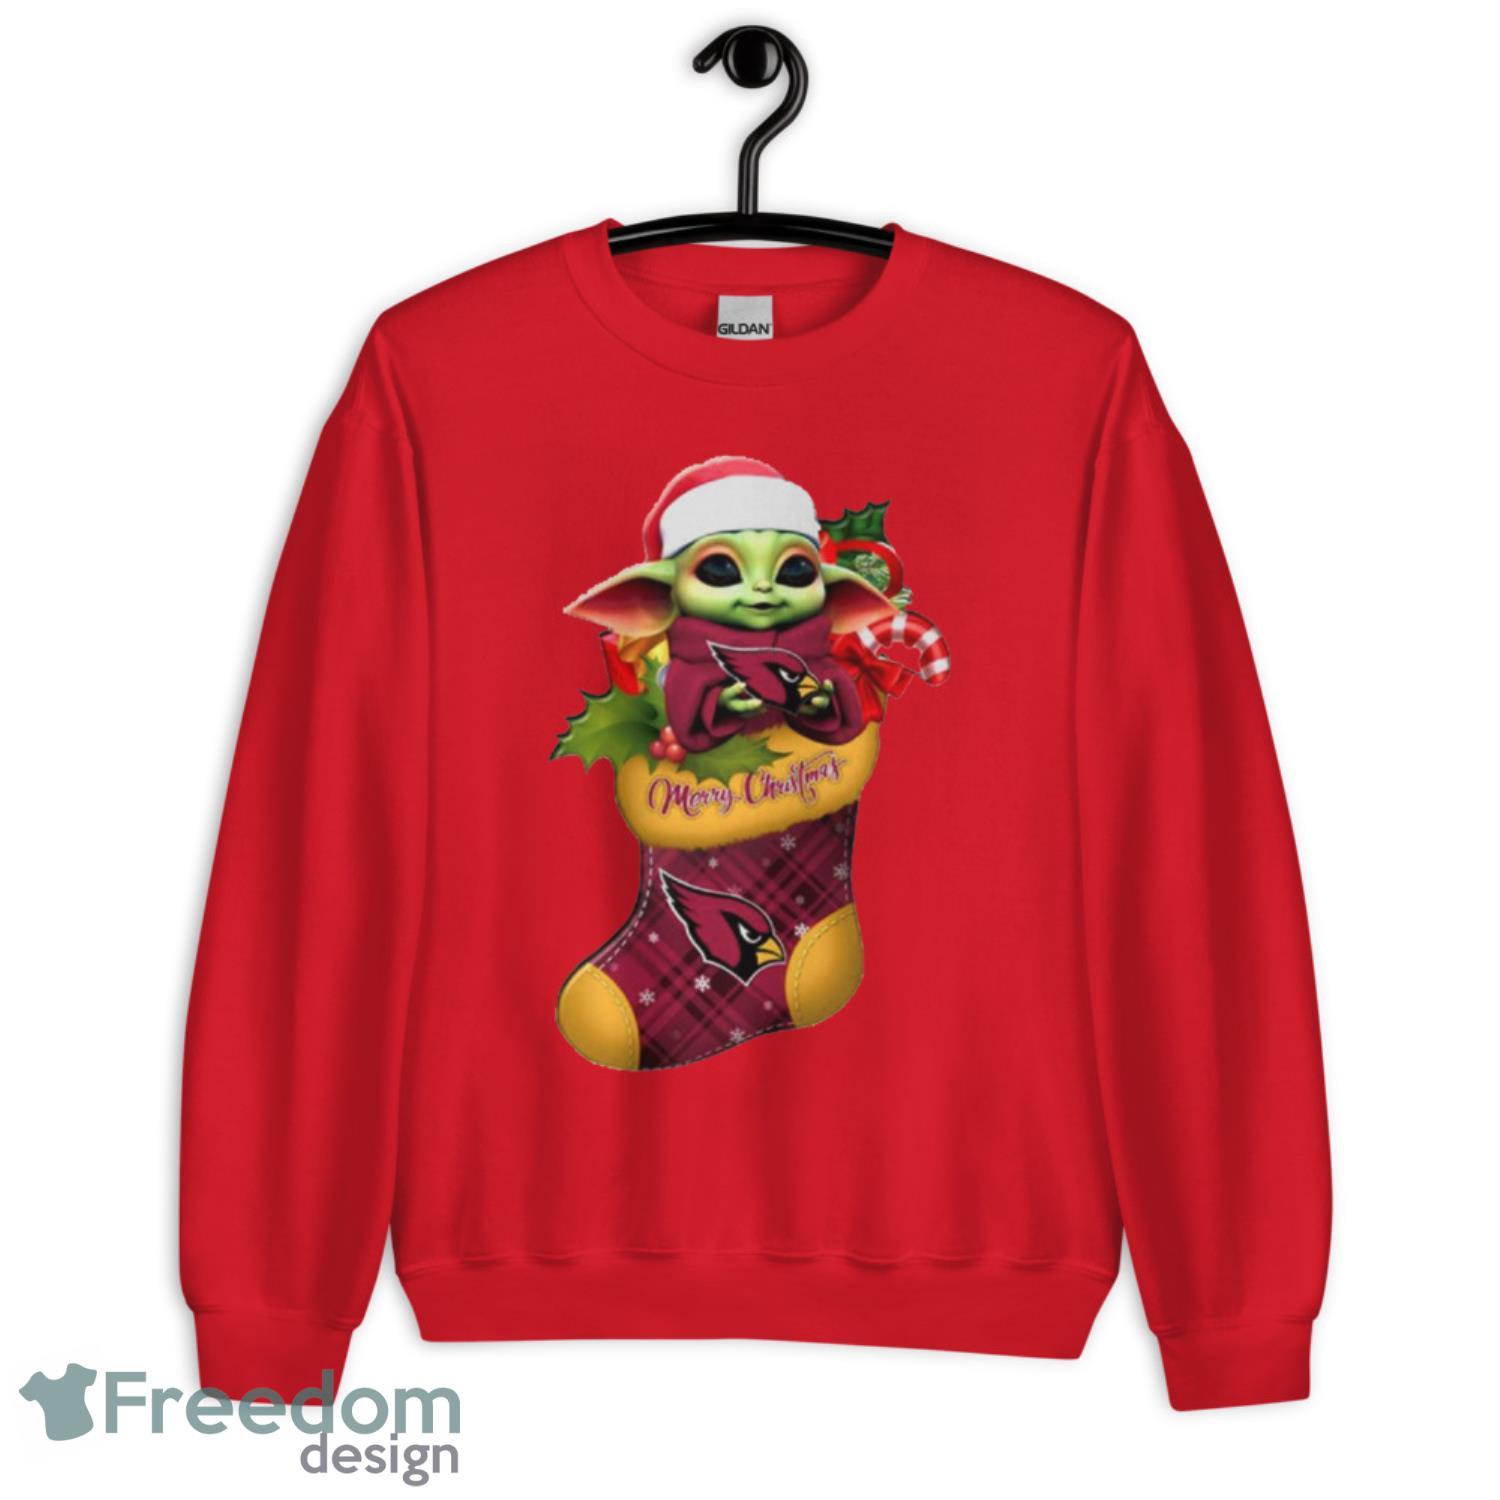 Arizona Cardinals Ornament Baby Yoda Hug Merry Christmas 2020 shirt - G185 Unisex Heavy Blend Crewneck Sweatshirt-1